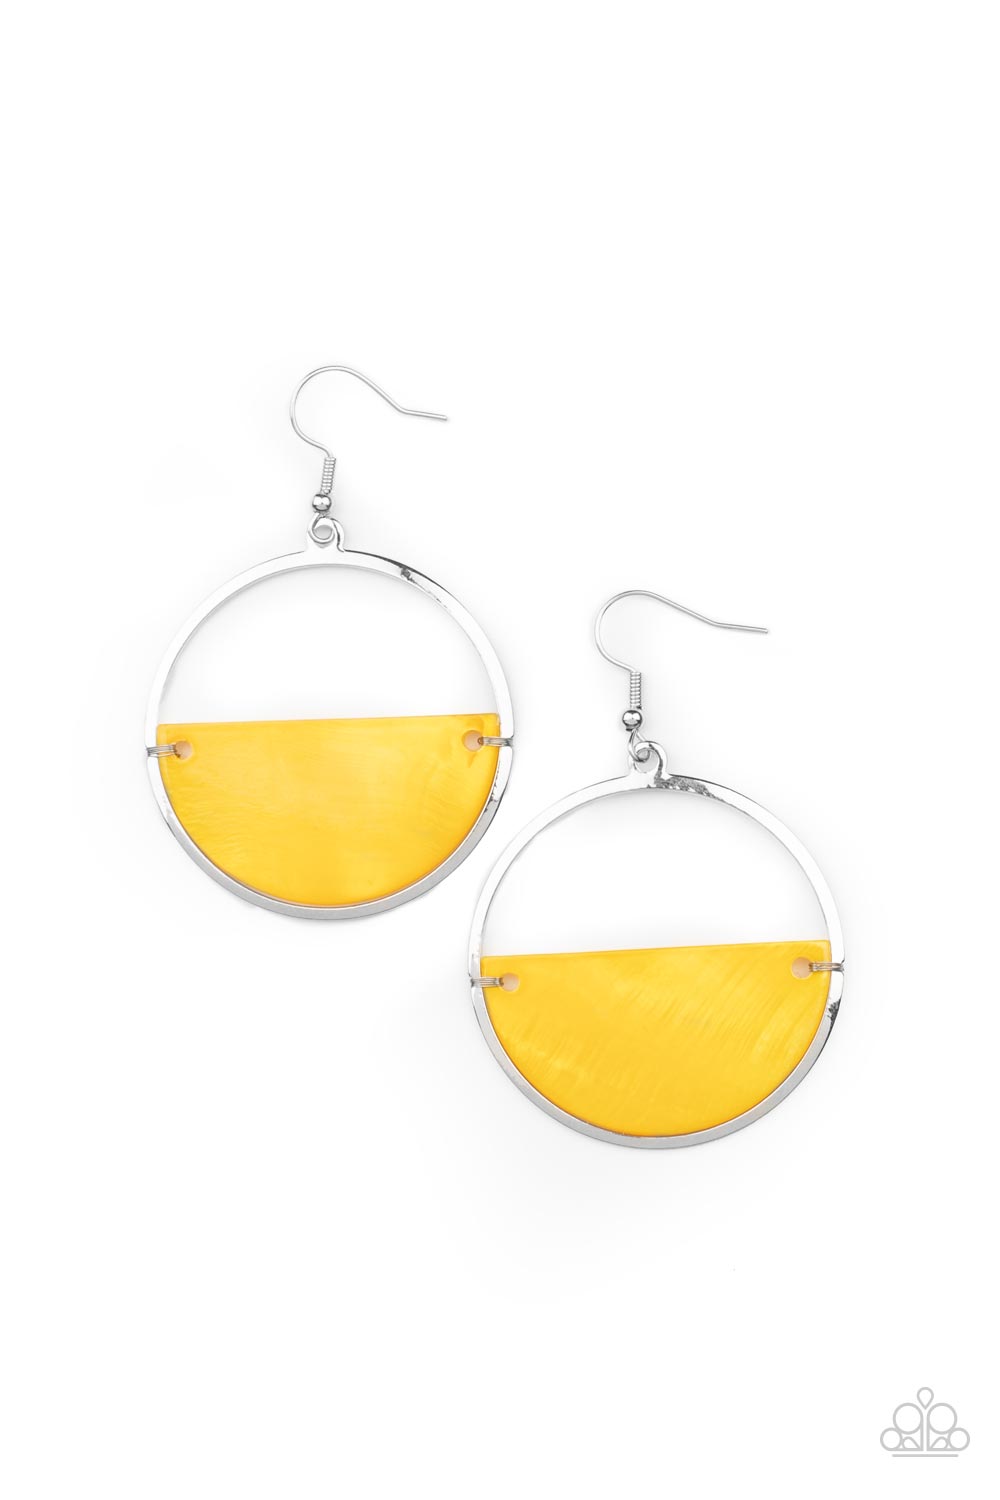 Paparazzi Accessories - Seashore Vibes #E551 - Yellow Earrings